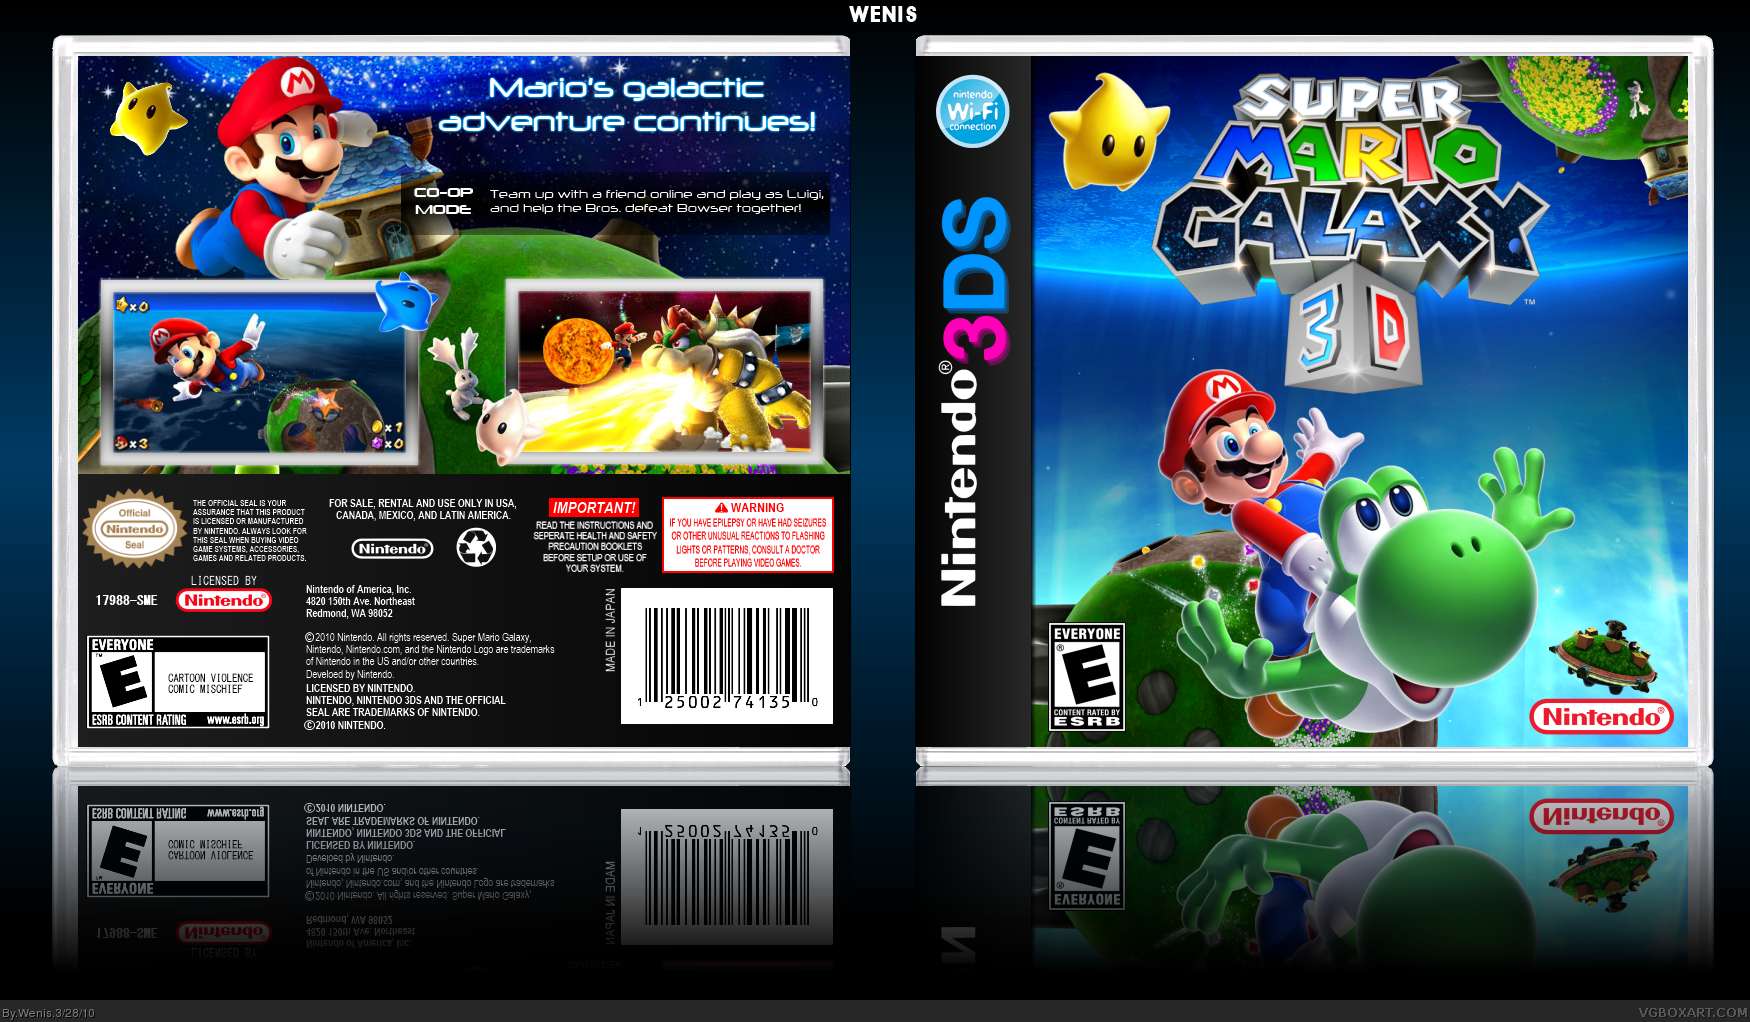 Super Mario Galaxy 3D box cover